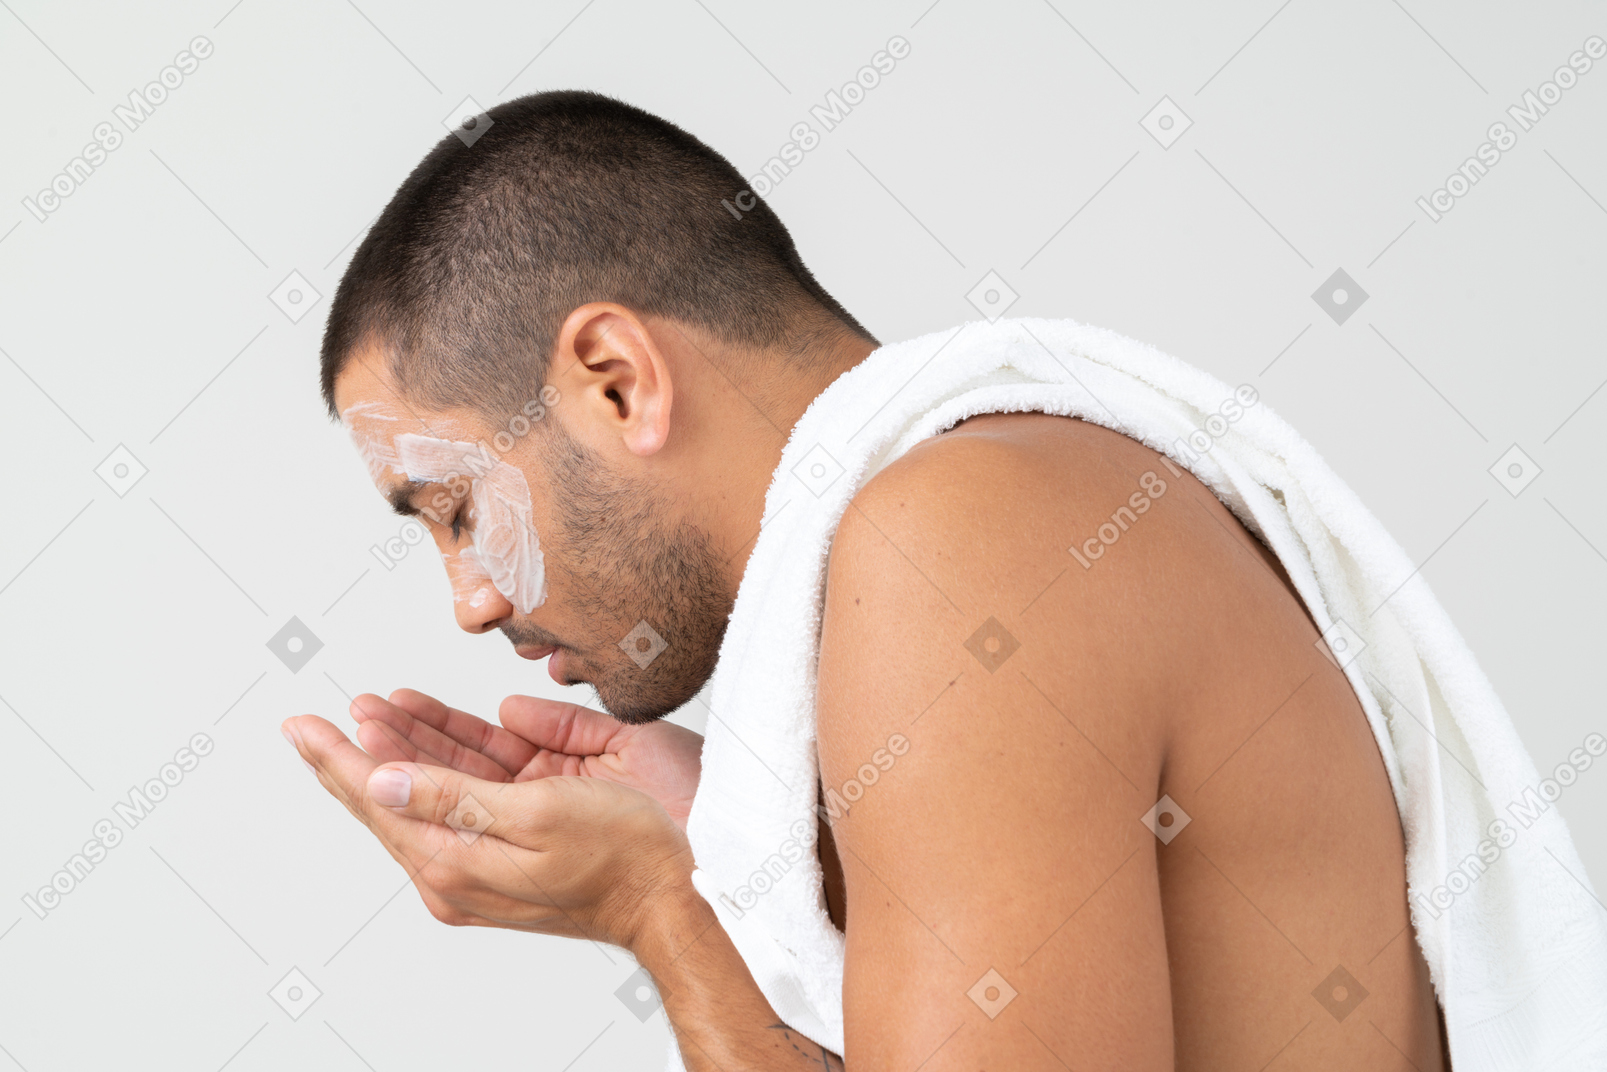 A man washing off face mask